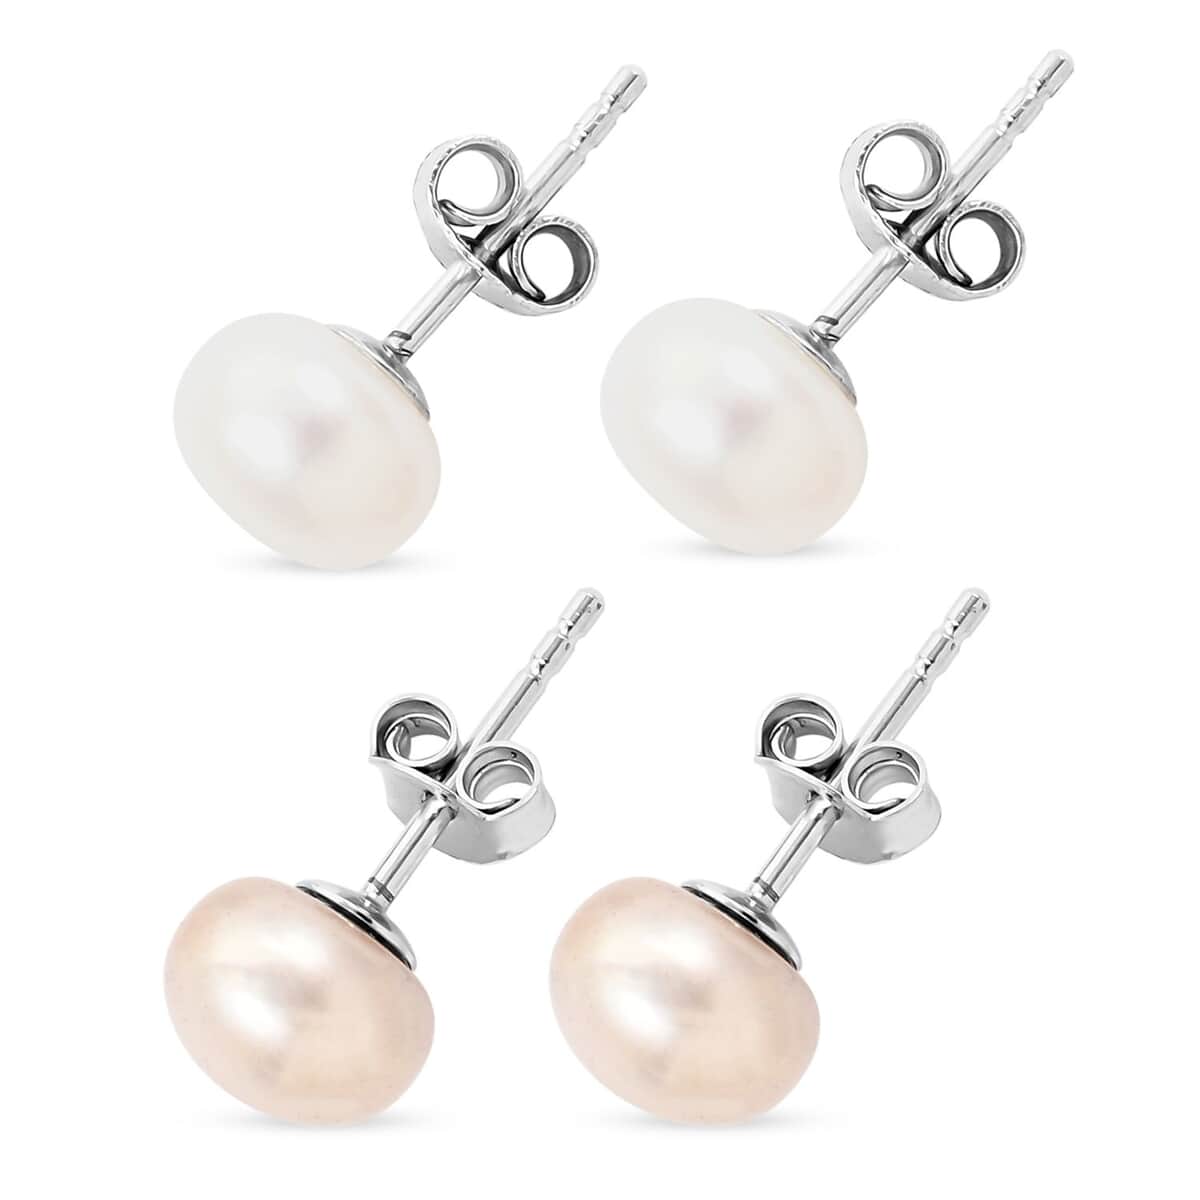 Buy Freshwater Pearl Set of 2 Solitaire Stud Earrings in Silvertone at ...